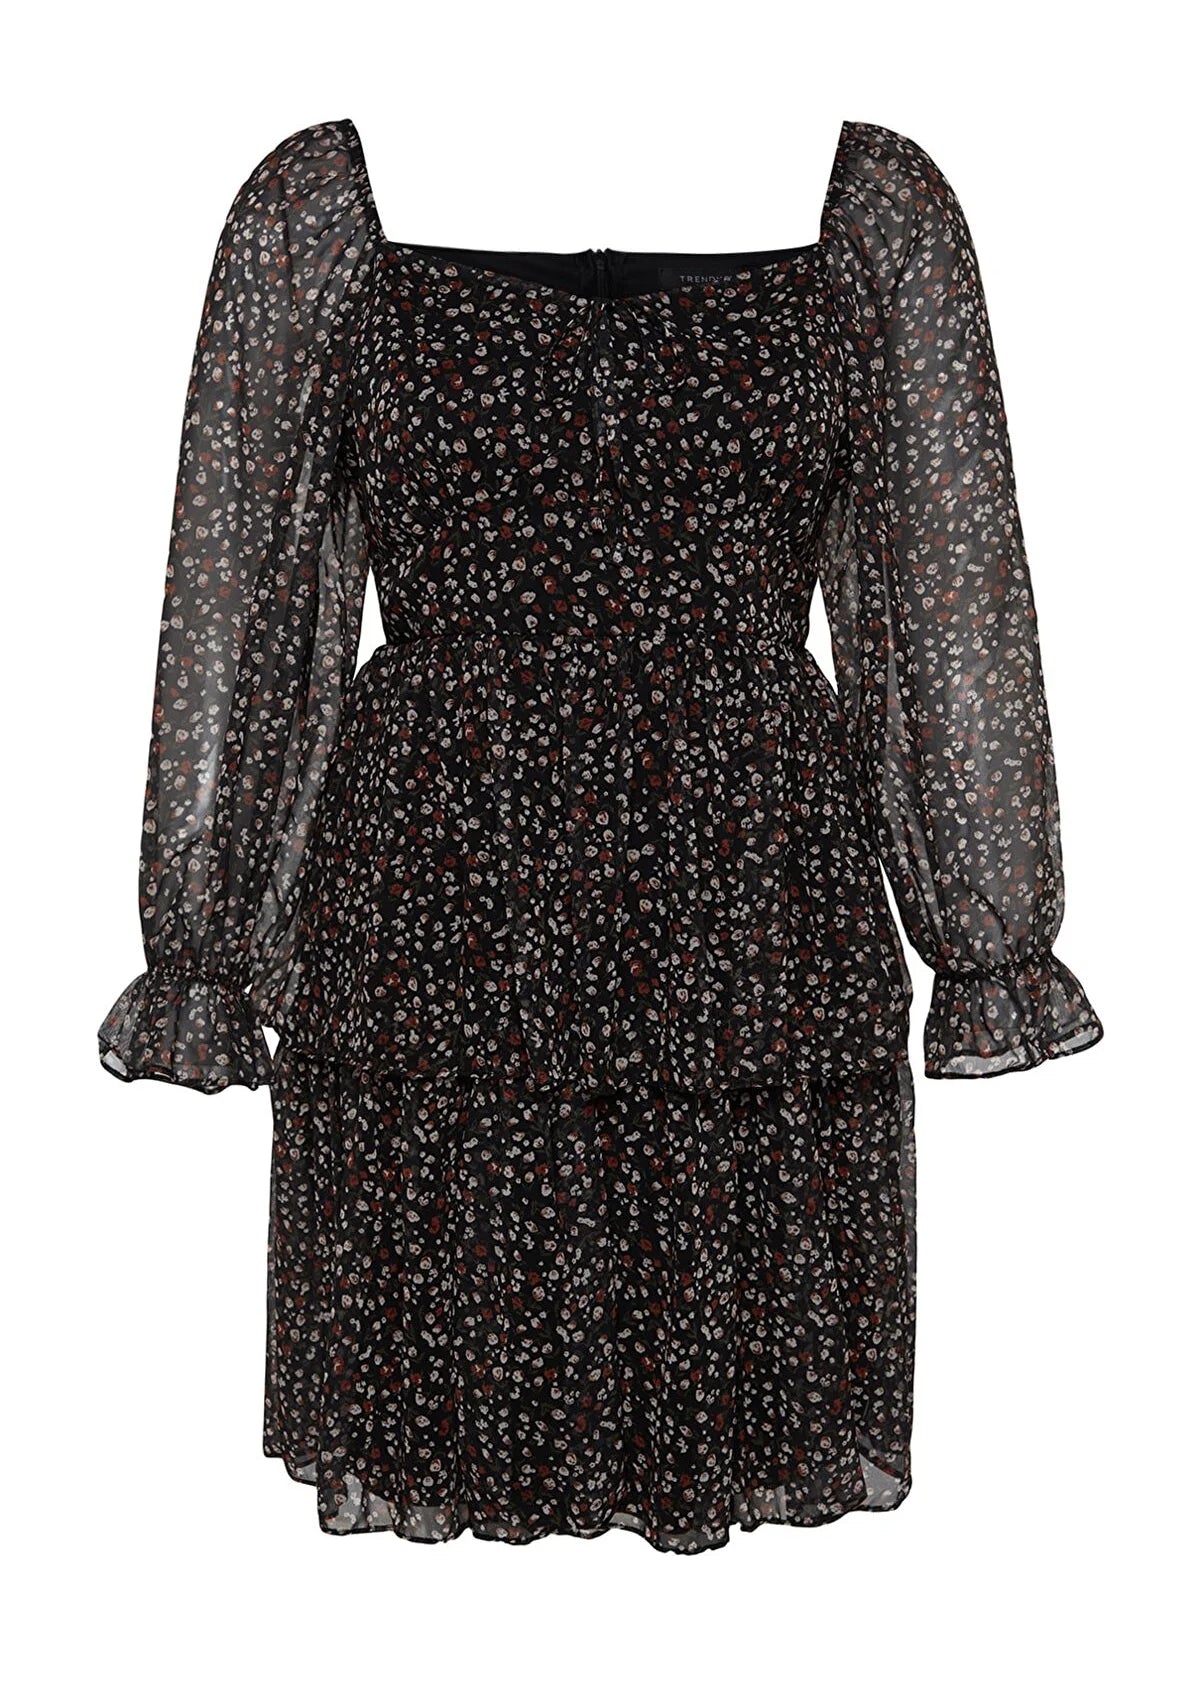 Plus Size Floral Patterned Chiffon Dress - Black